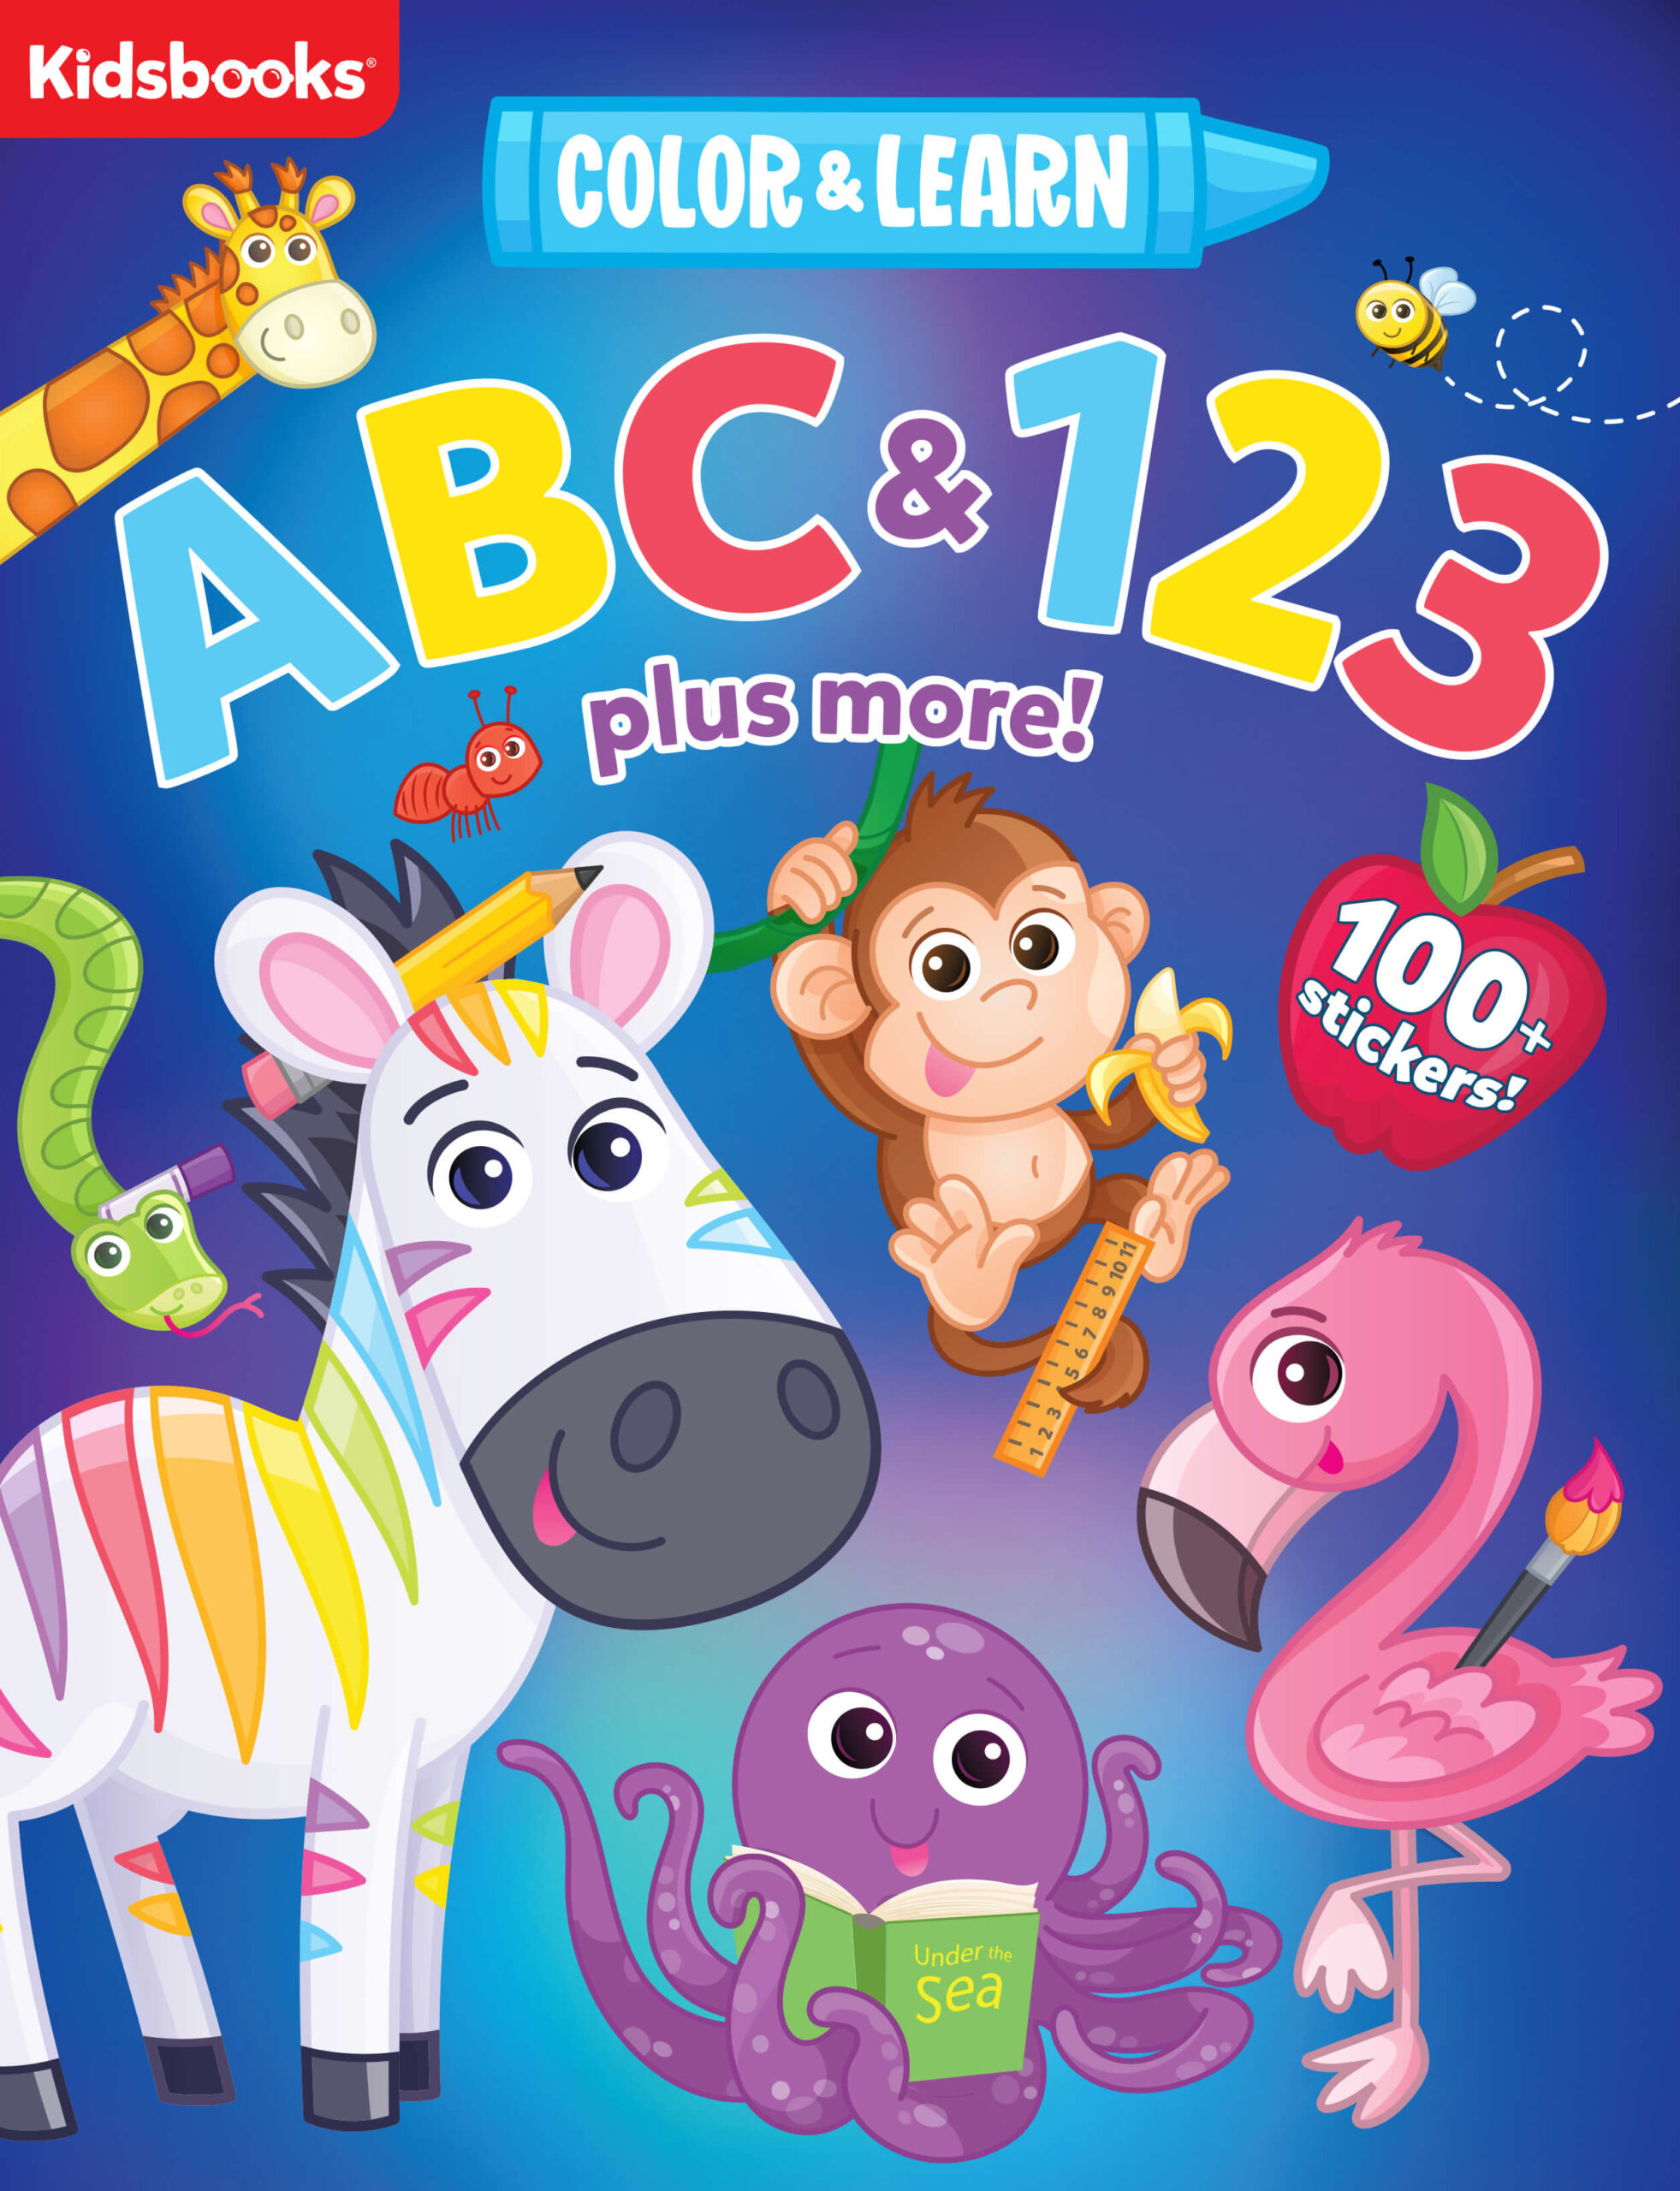 Color & Learn: ABC & 123 plus more!